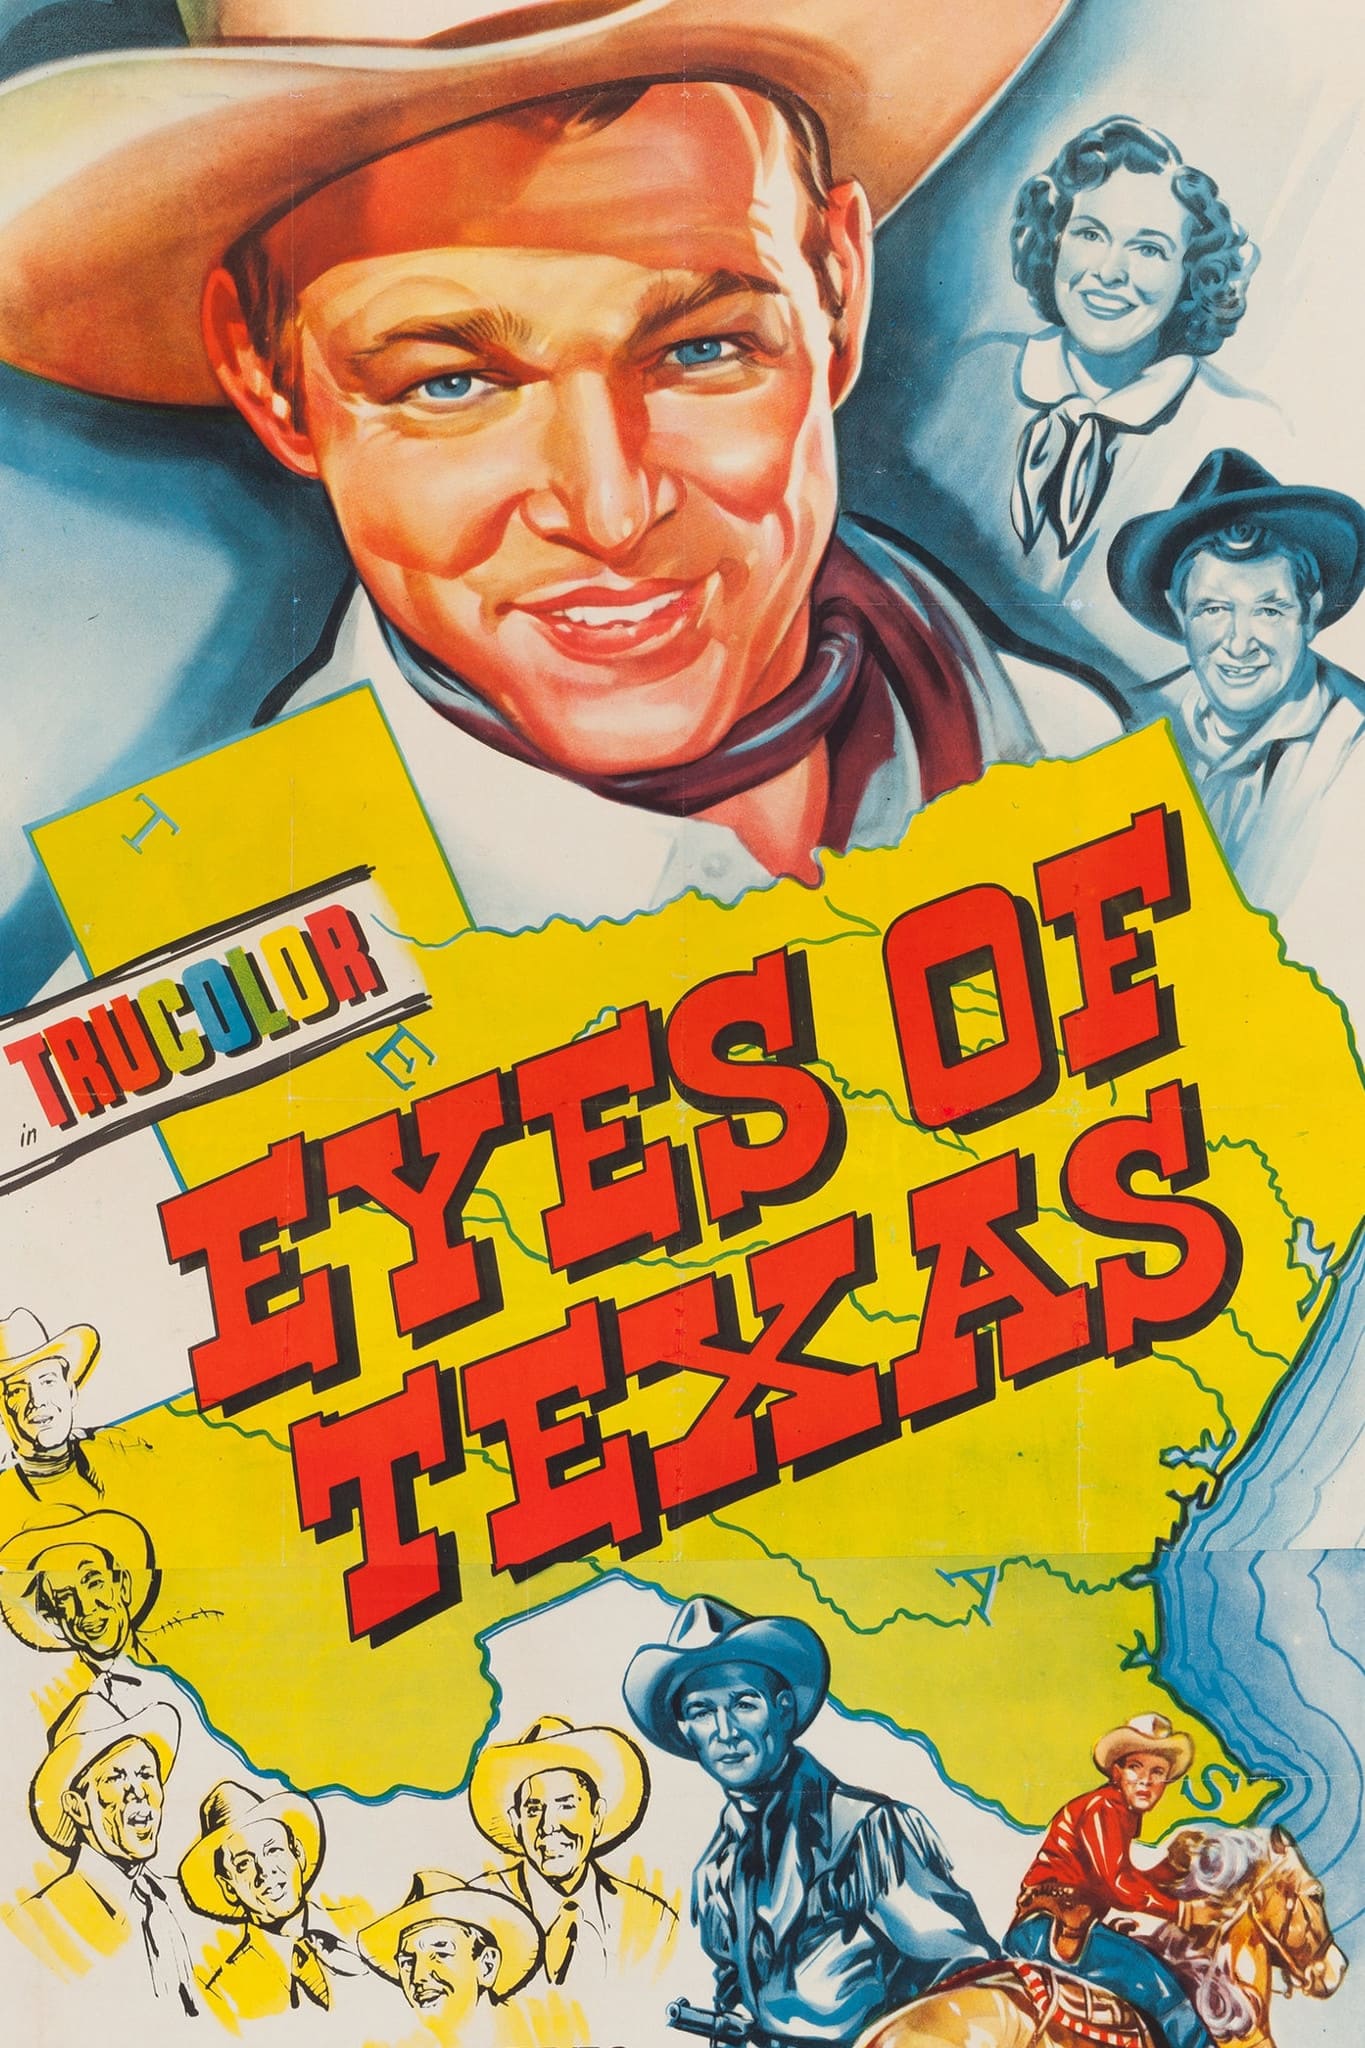 Eyes of Texas